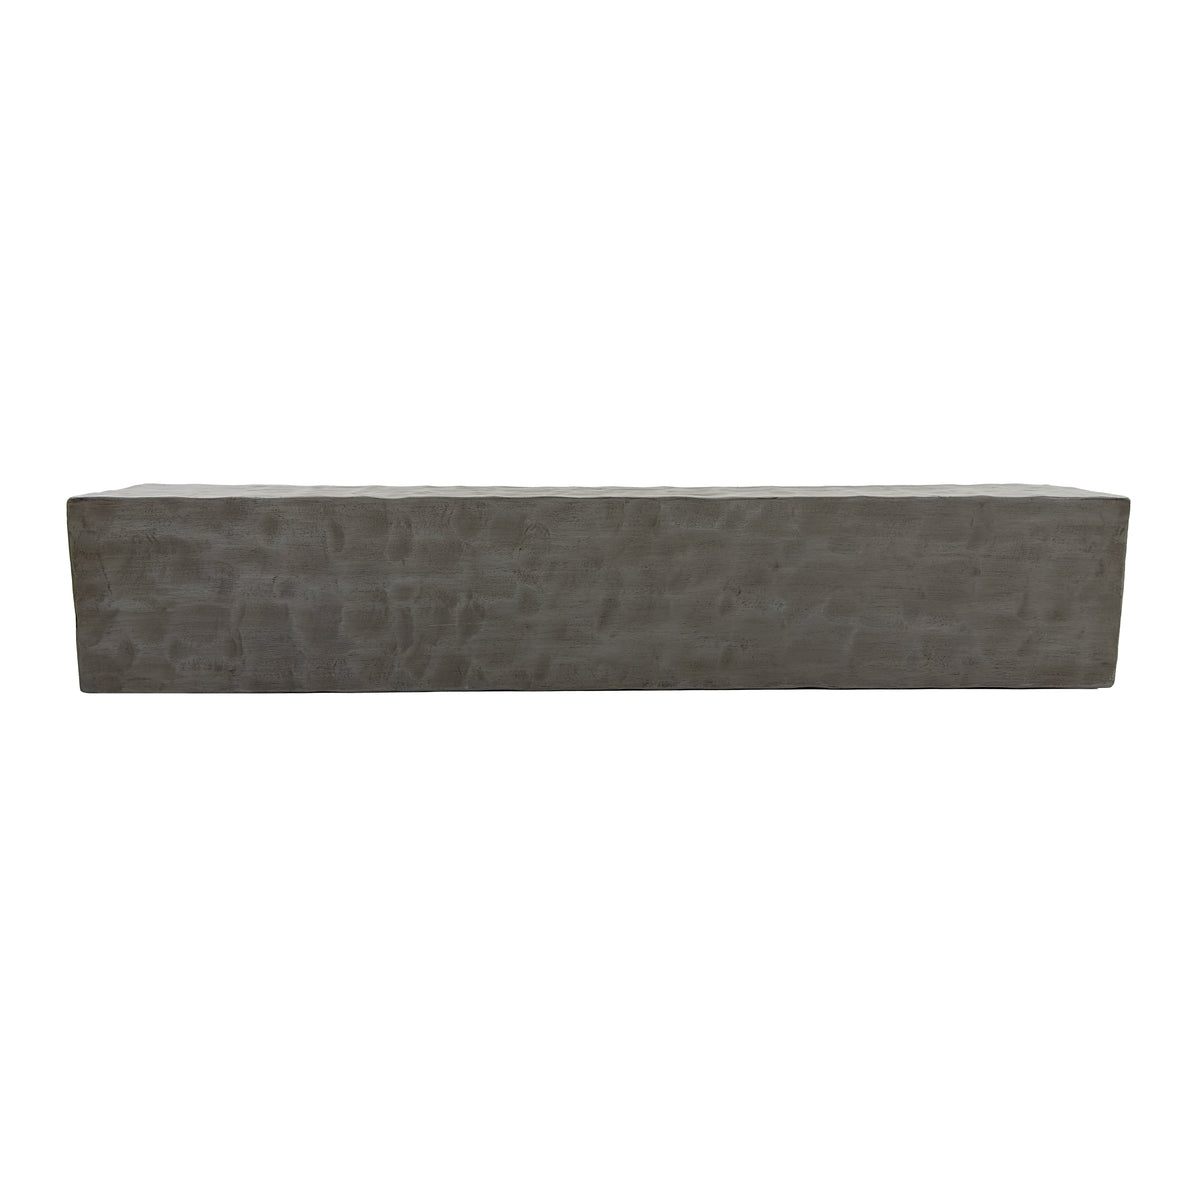 Chiseled - Non-Combustible Concrete Mantel Shelves By Design Specialties